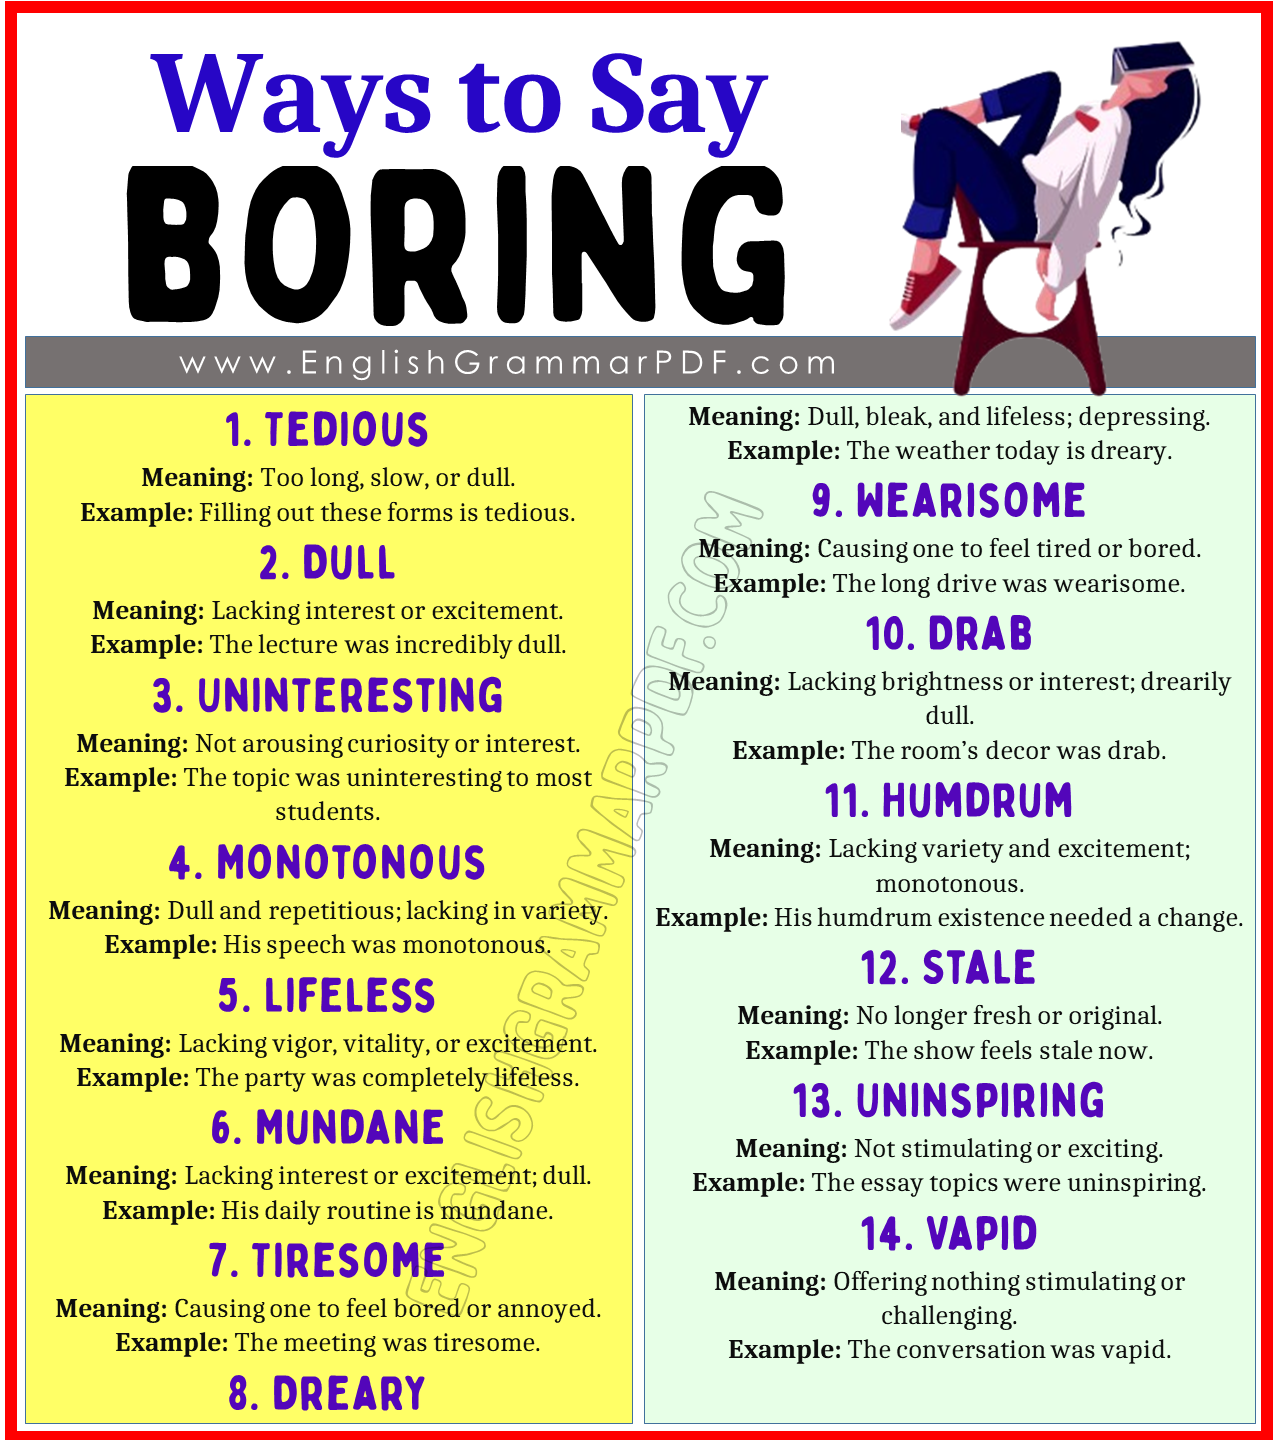 Ways to Say Boring 2